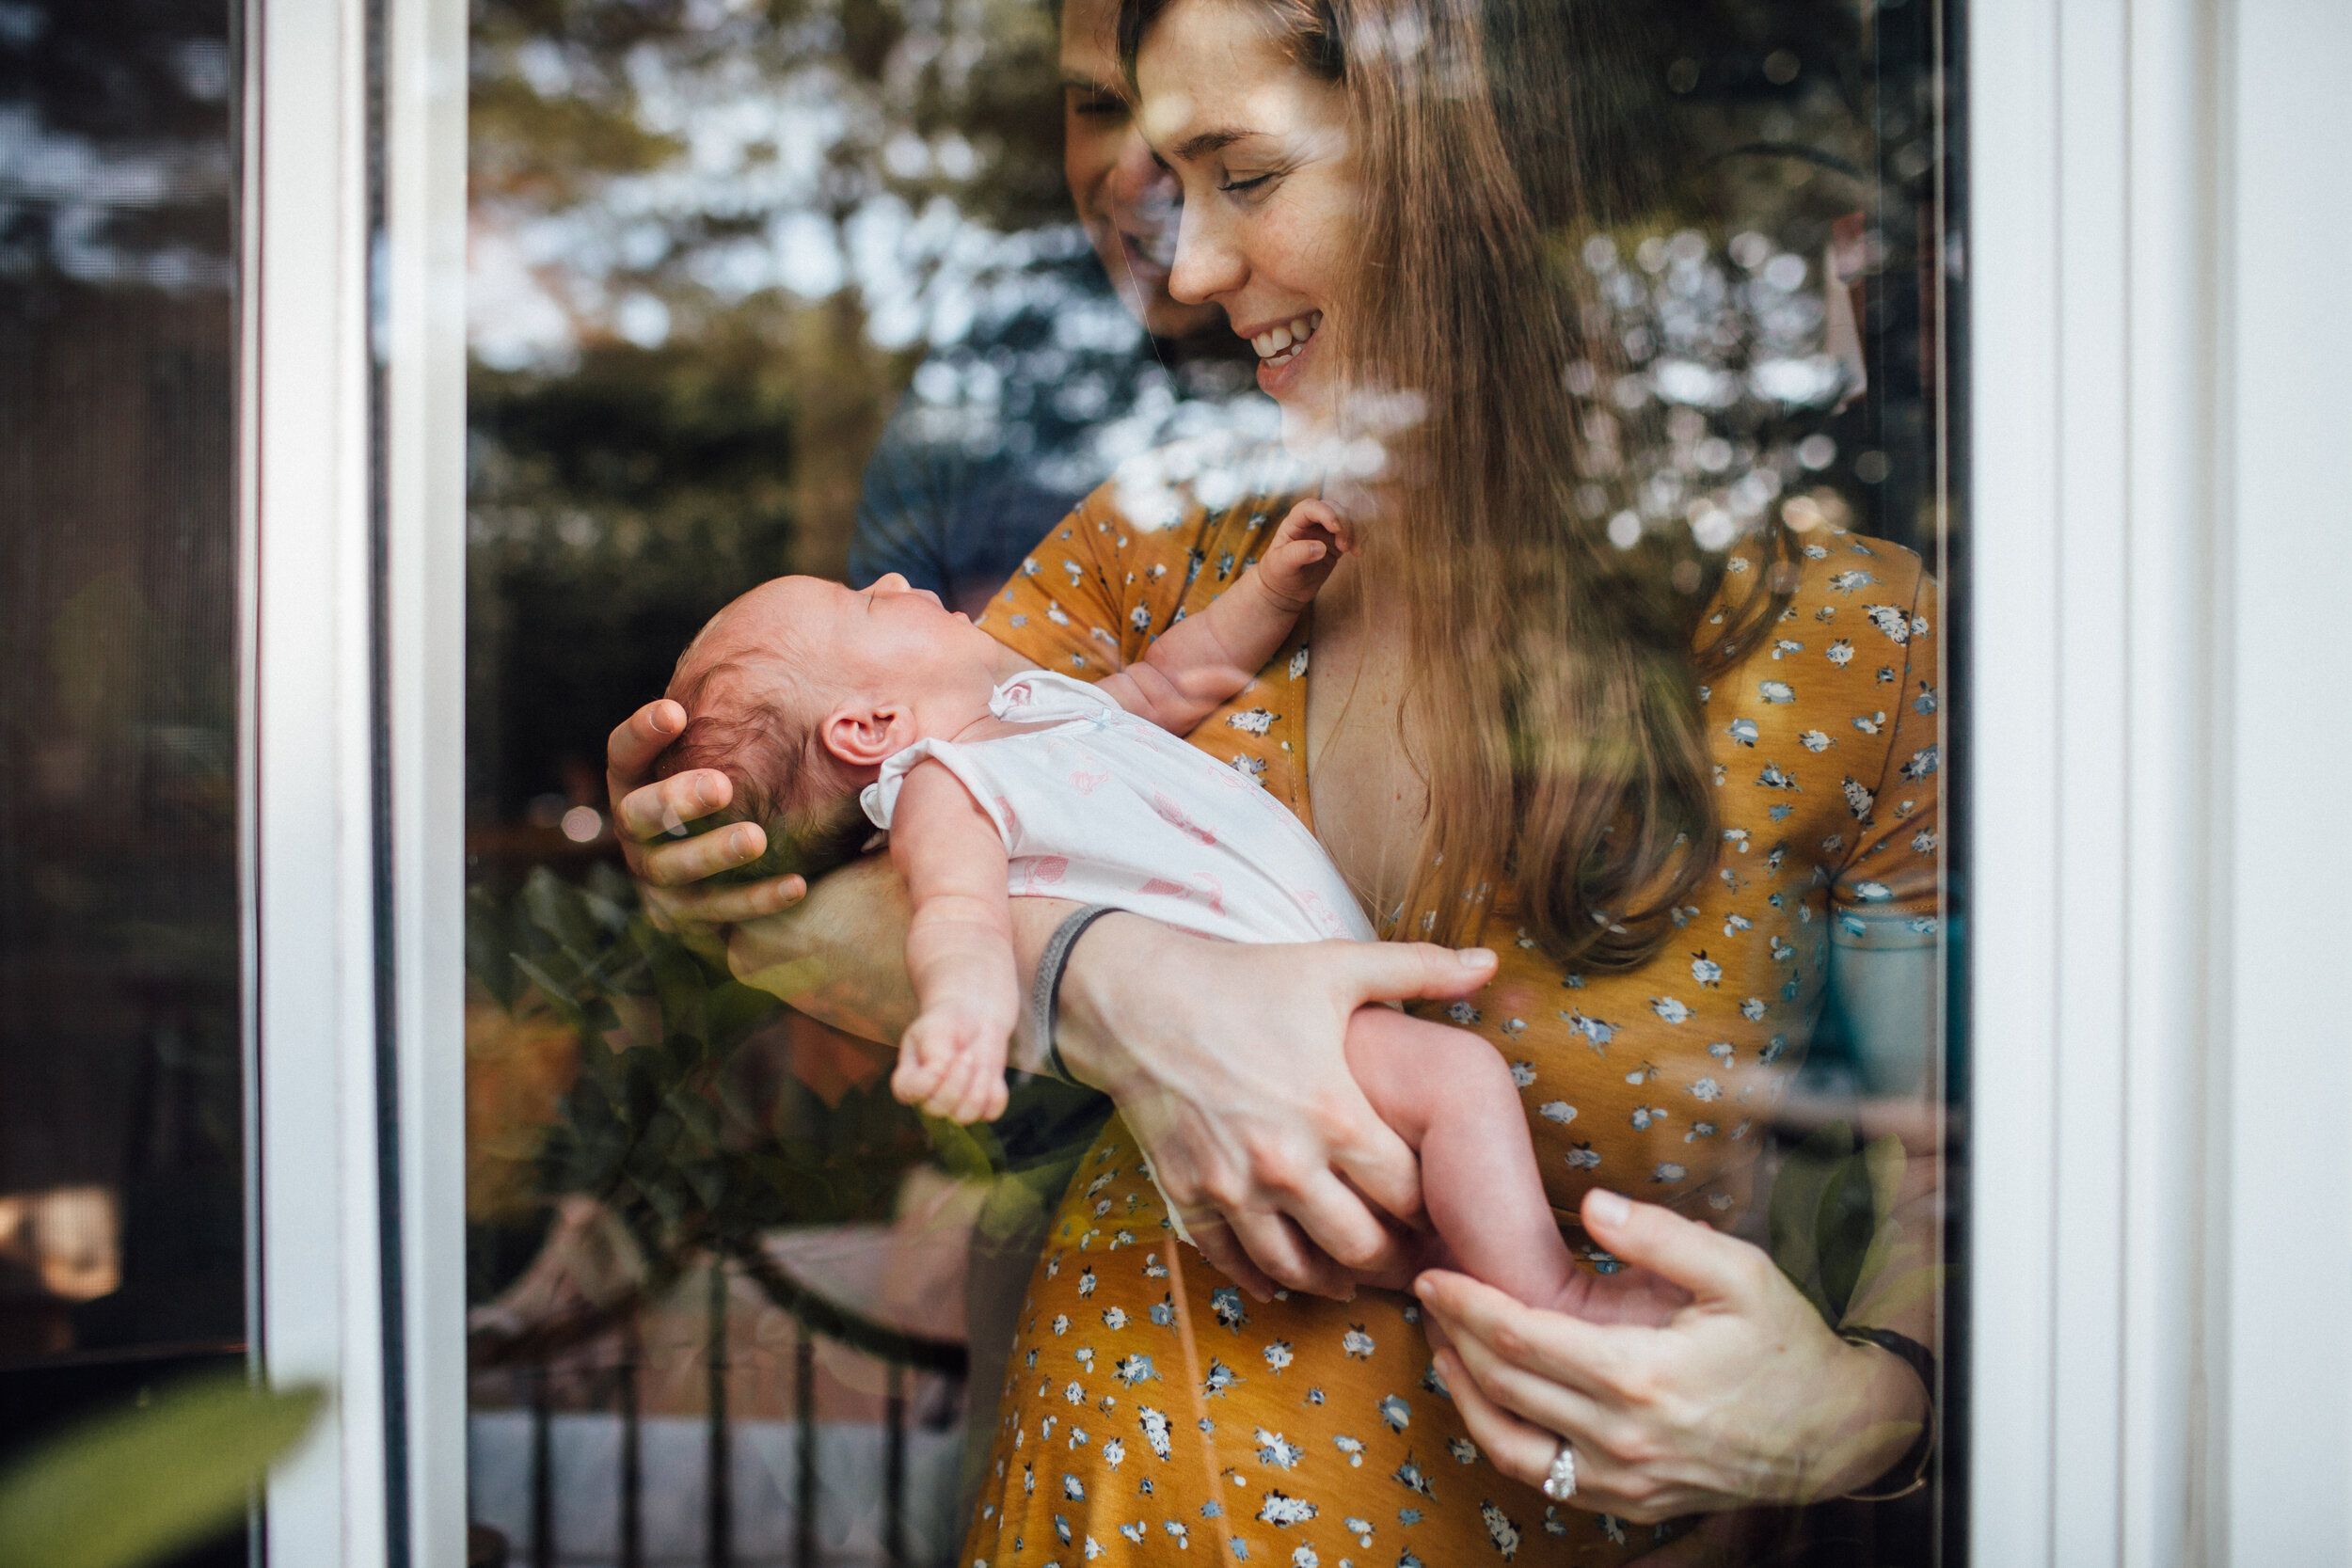 newborn baby through a window.jpg